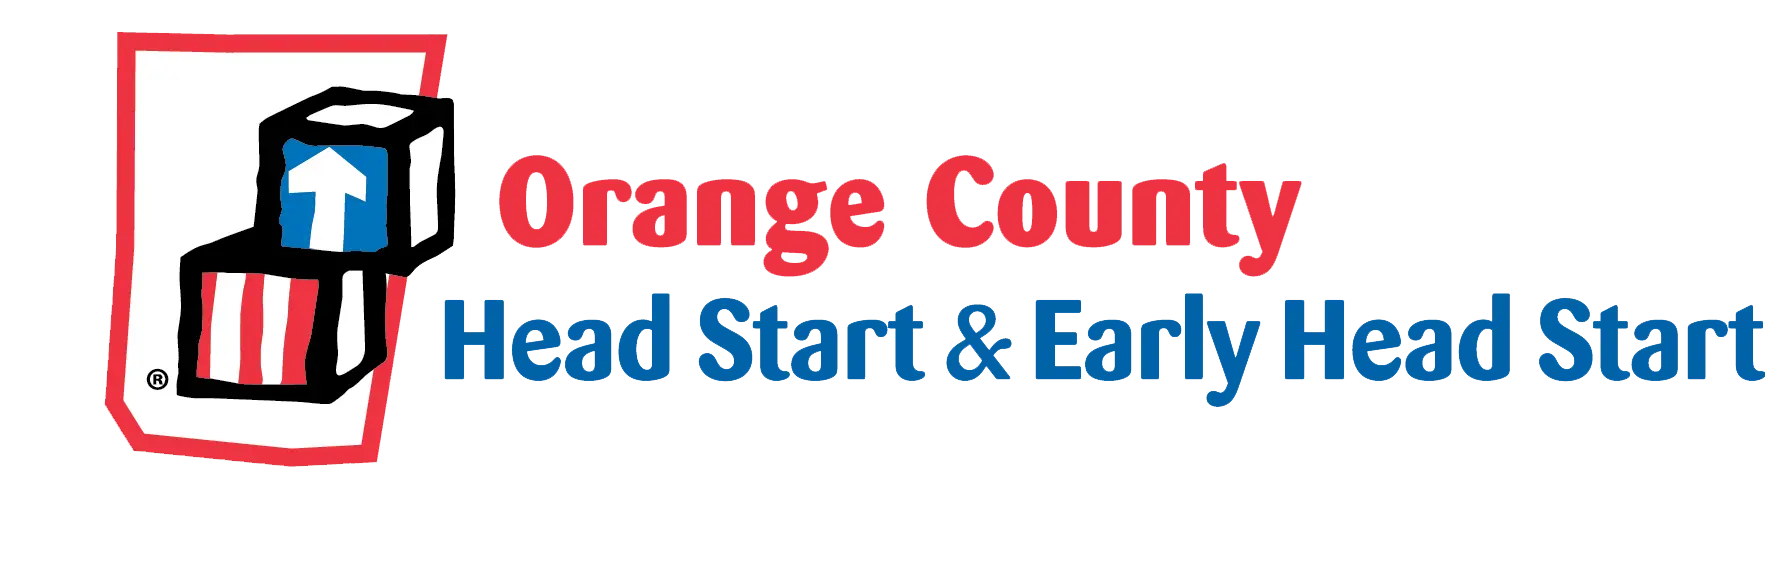 orange county head start